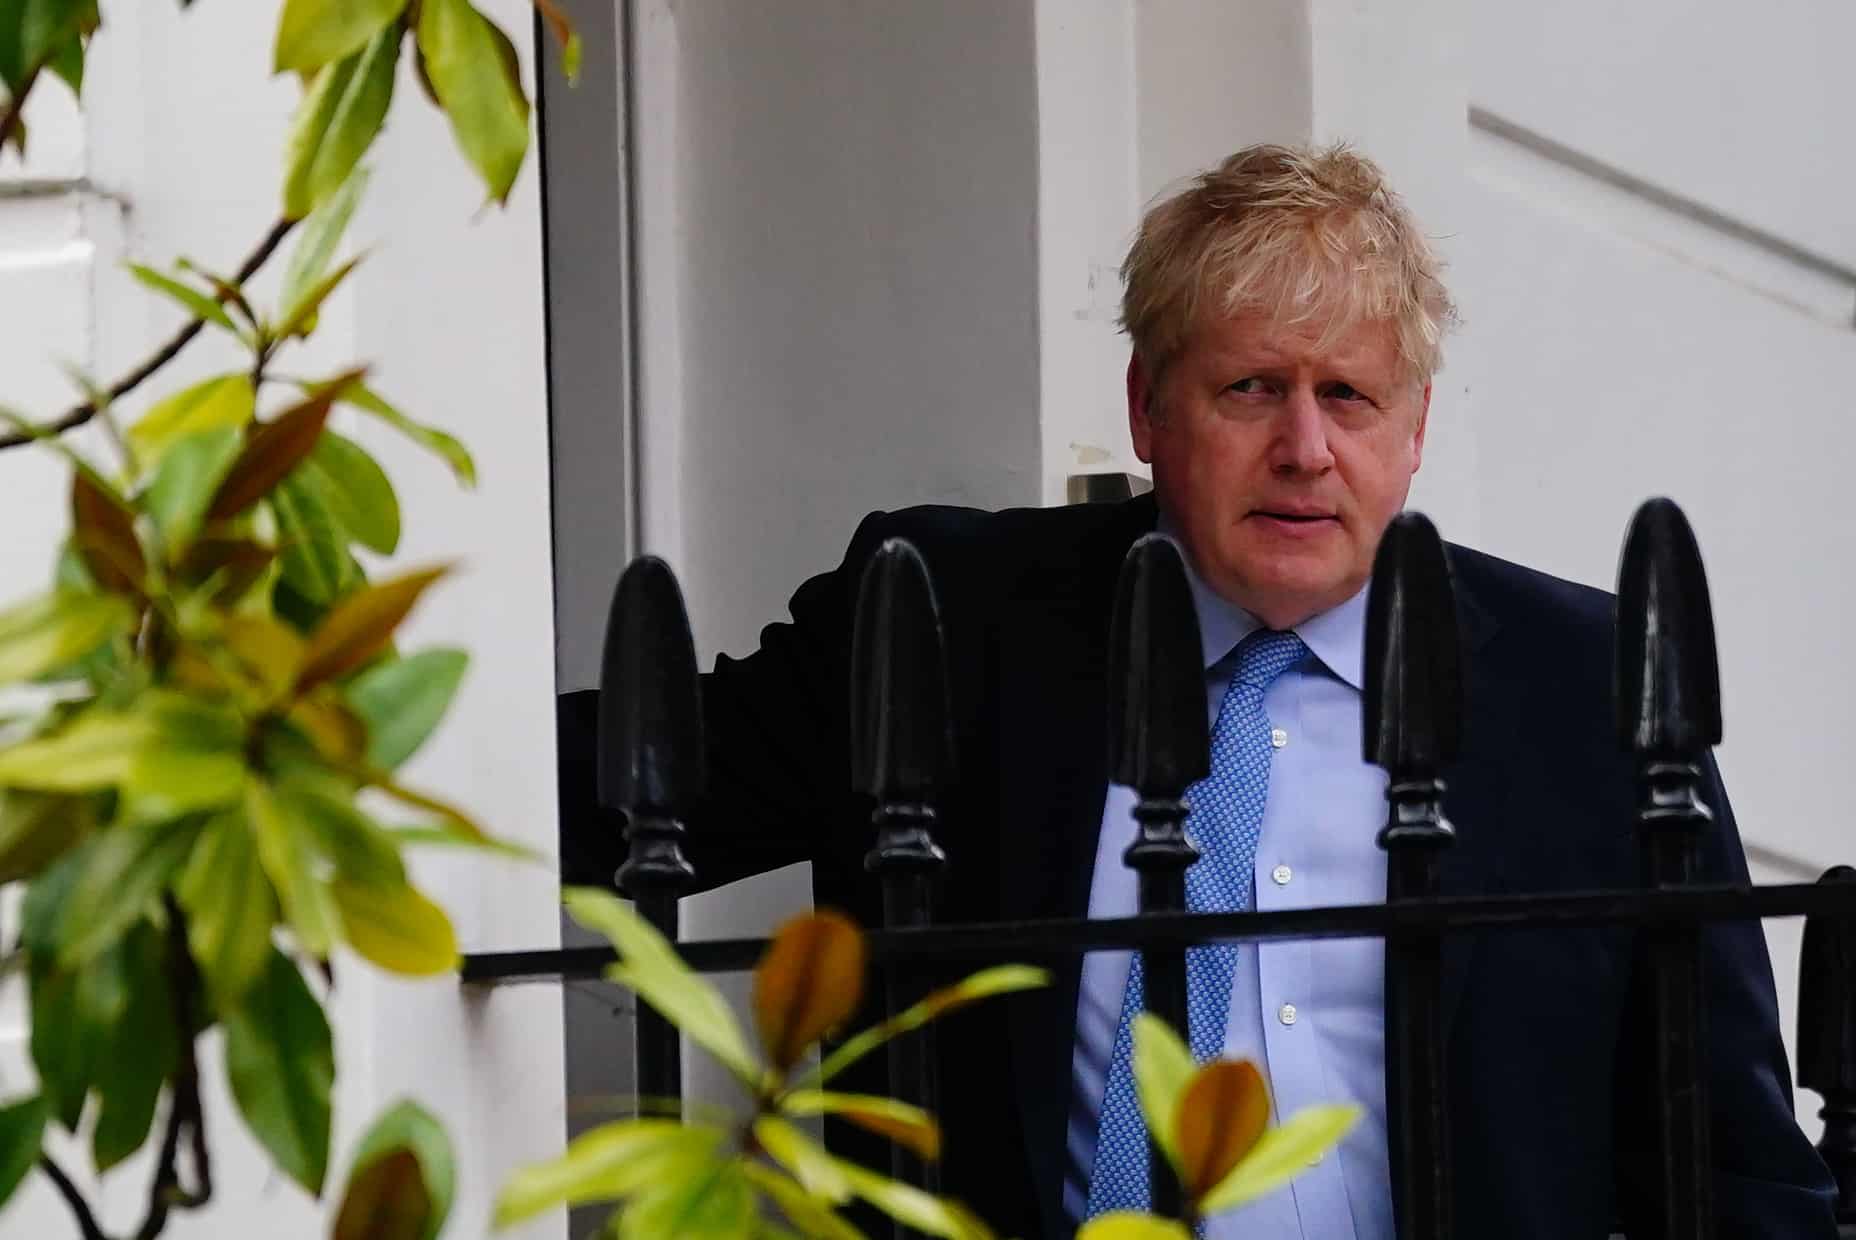 Boris Johnson reported to police over ‘lockdown breaches’